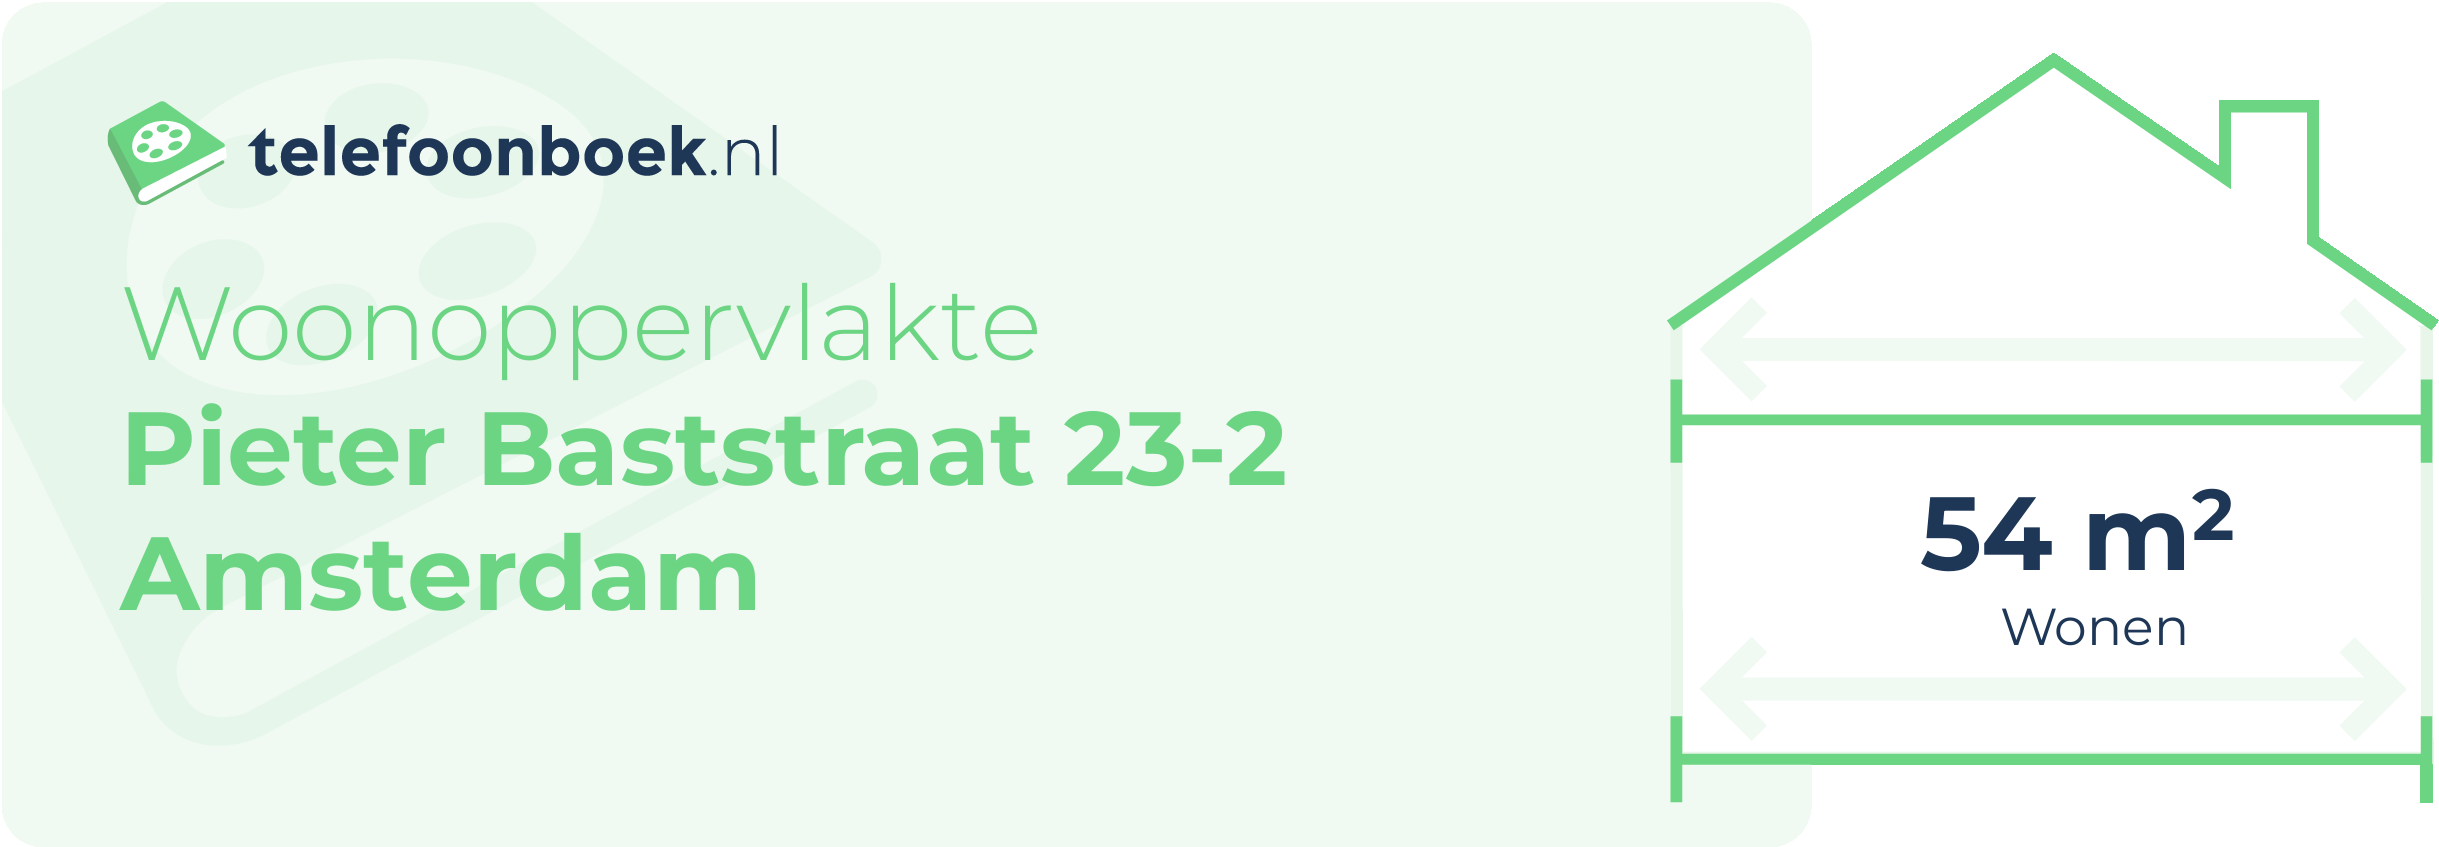 Woonoppervlakte Pieter Baststraat 23-2 Amsterdam